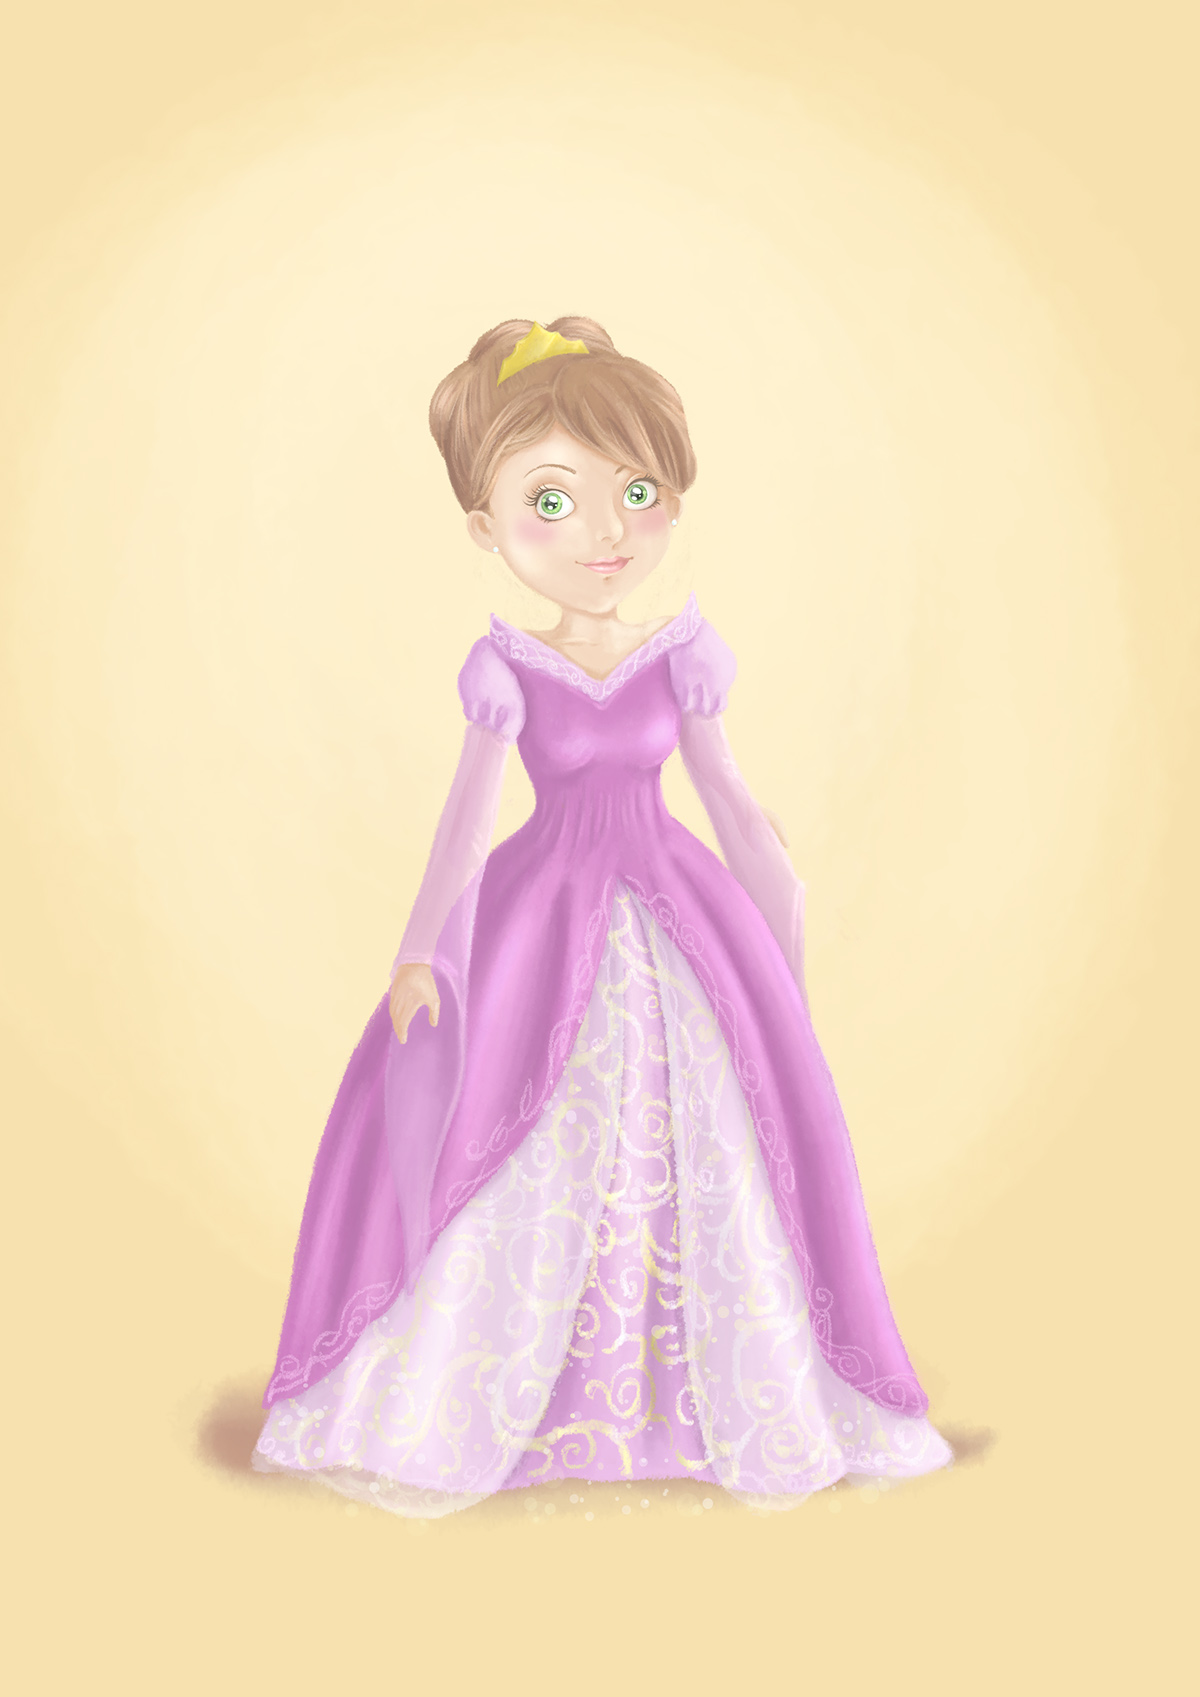 art of fairyworld Princess fantasy princess photoshop Digital Drawing children illustration